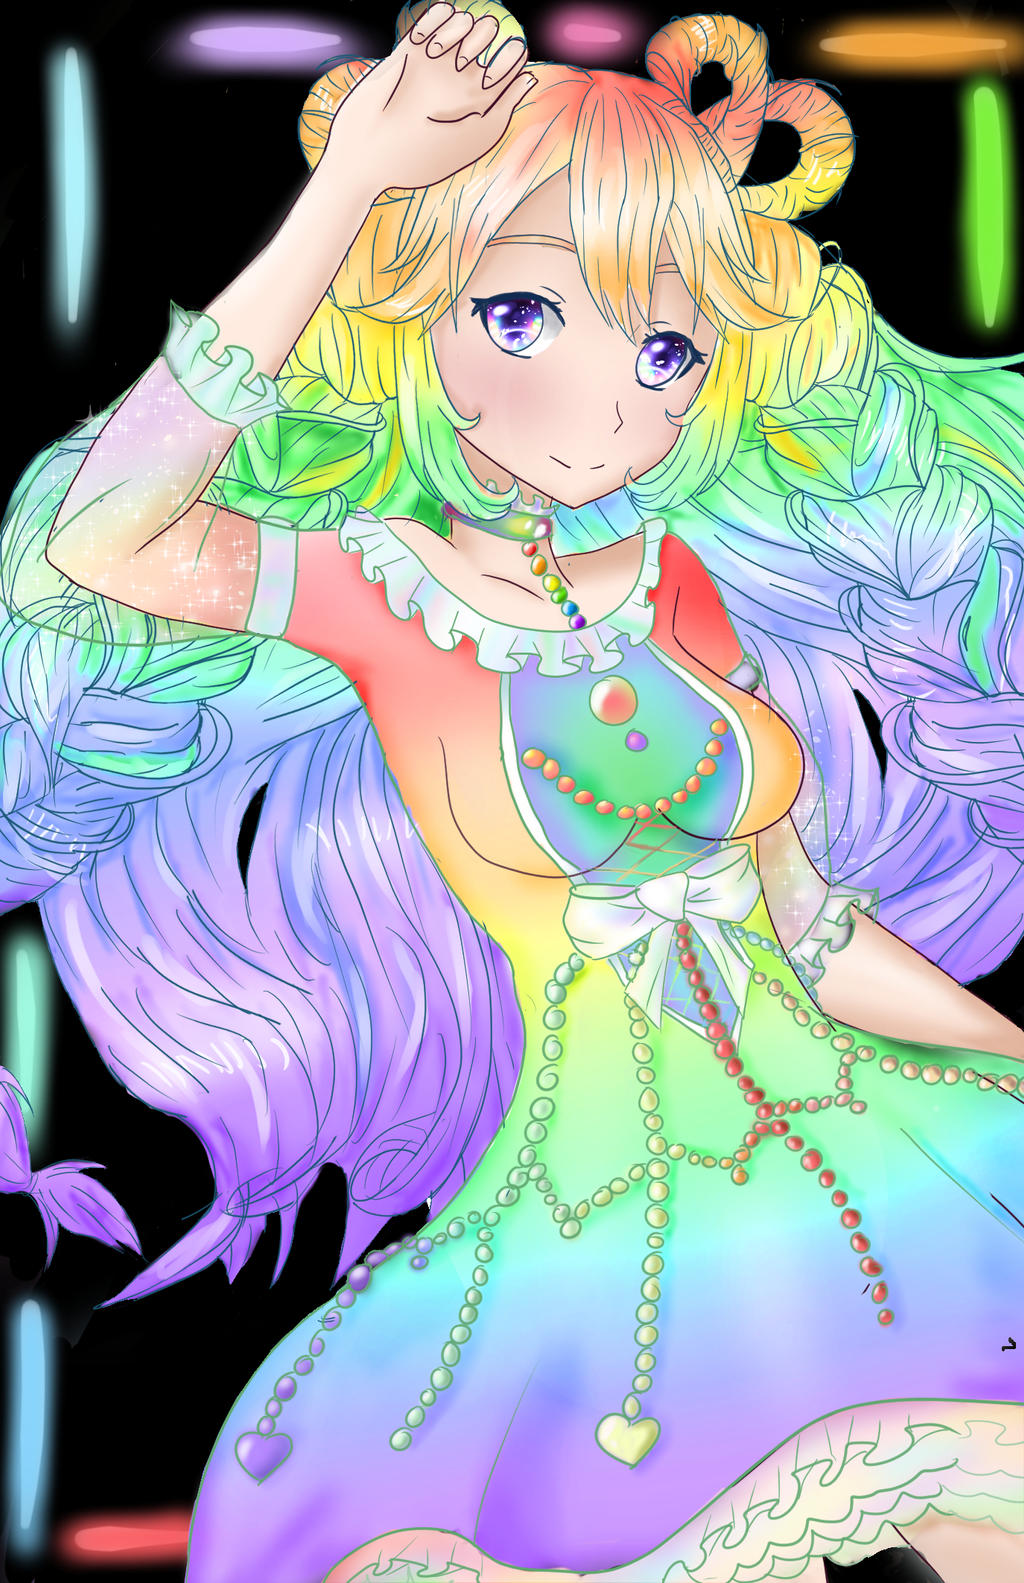 Rainbow Anime Girl by Yougotink on DeviantArt